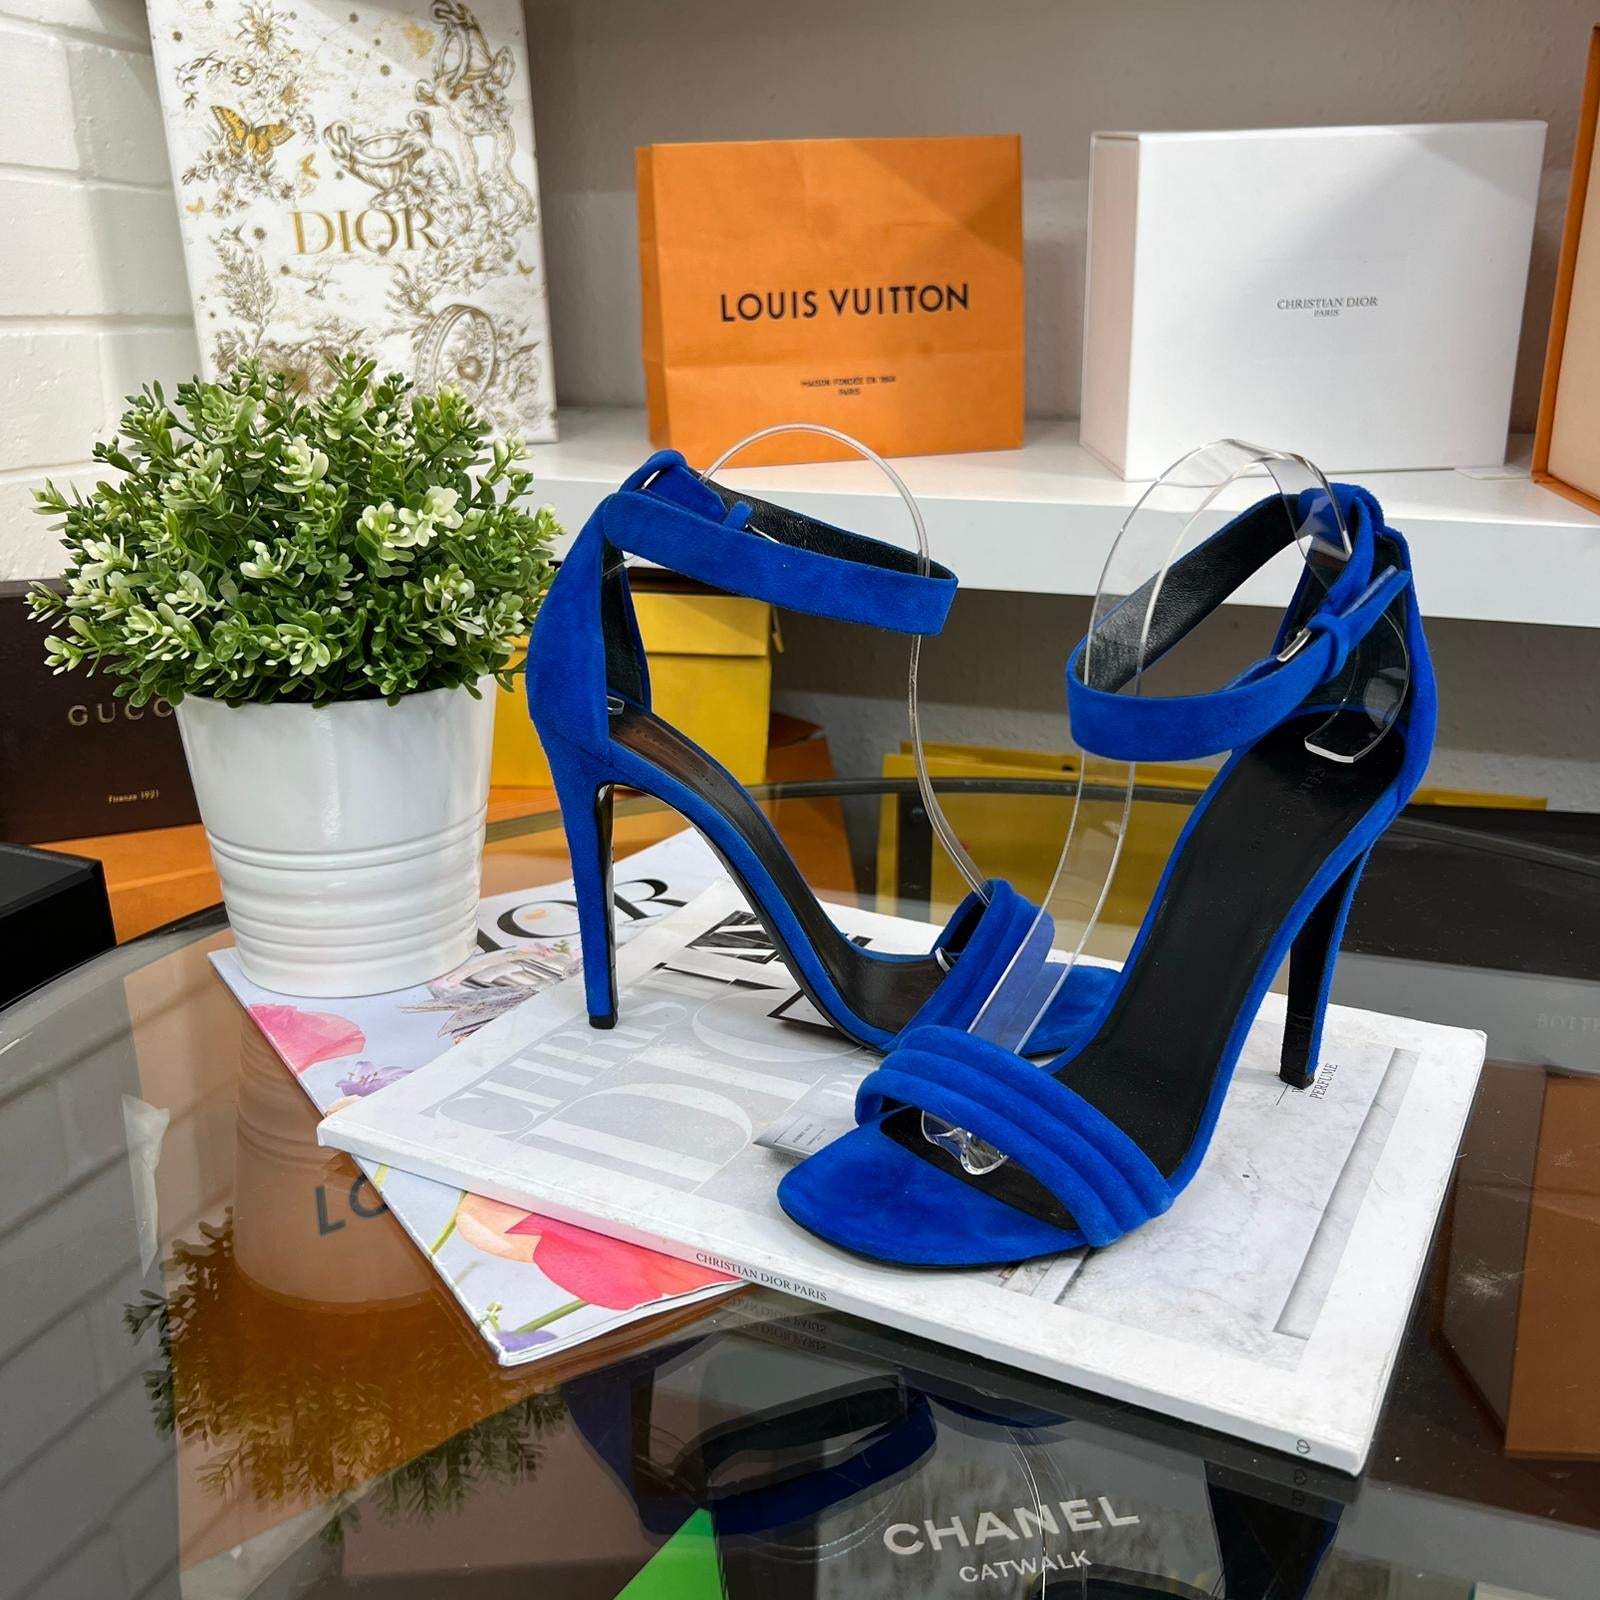 Italian Designer Shoes And Bag Set – For Women USA